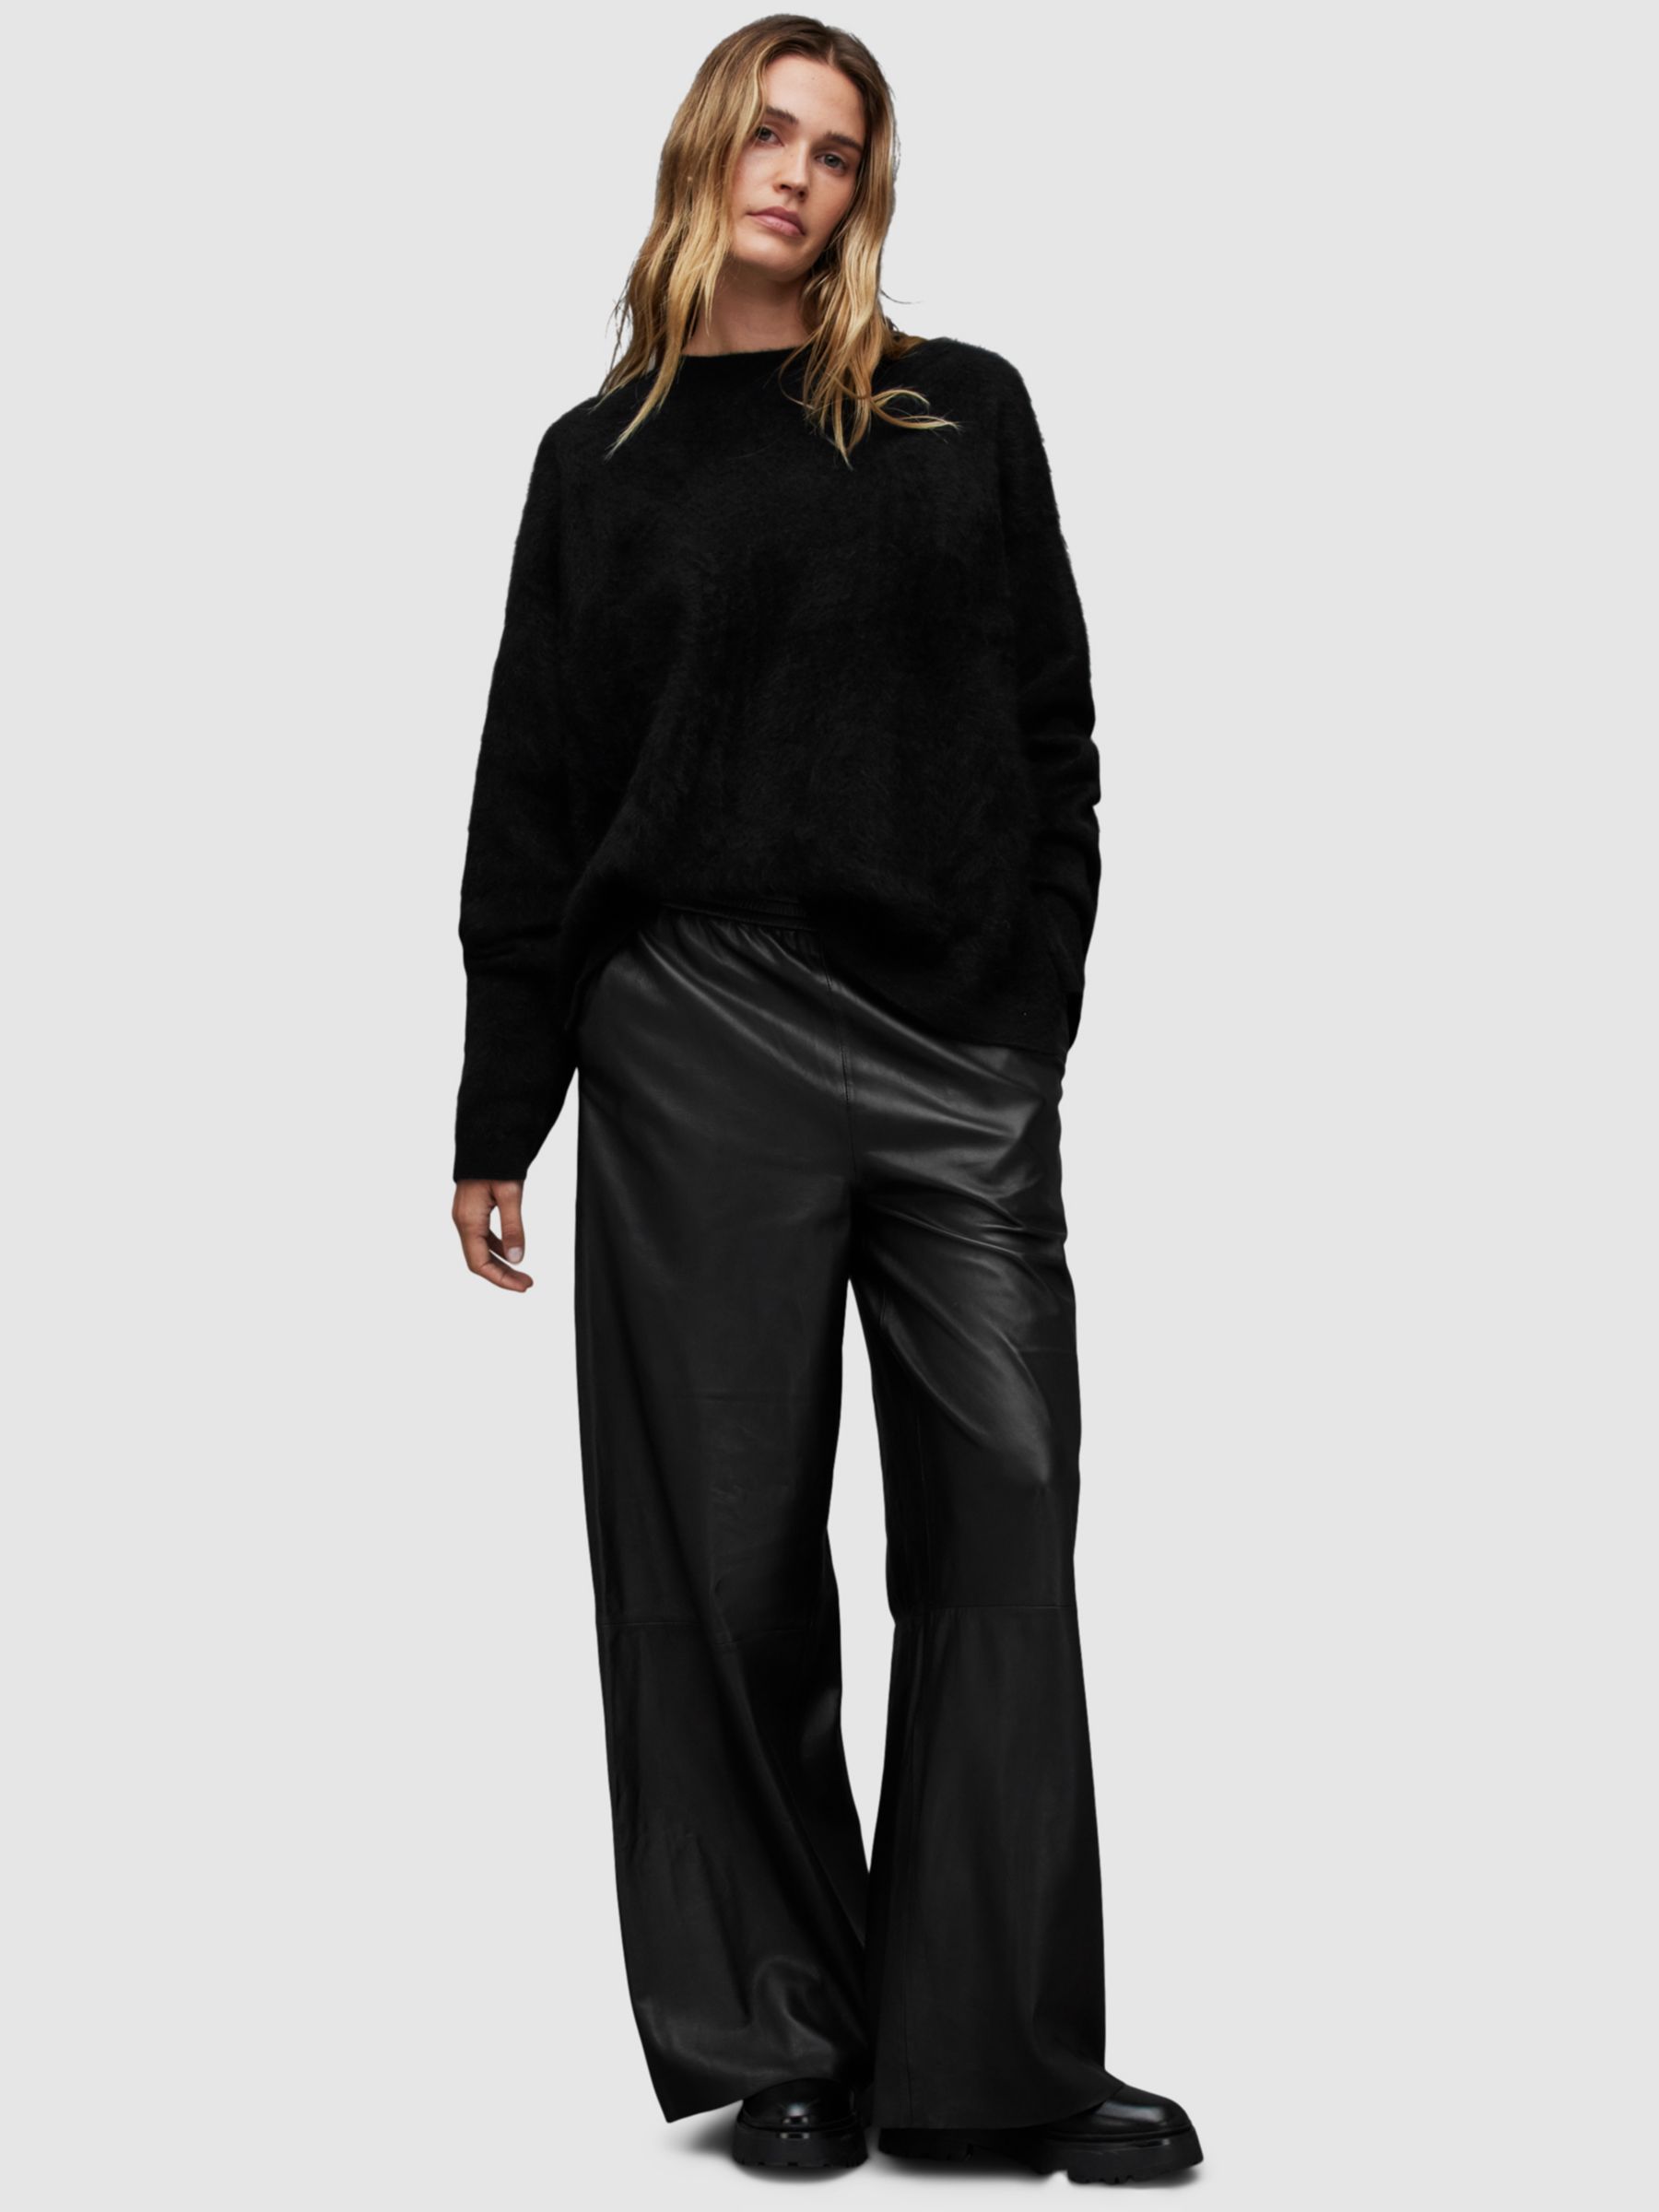 AllSaints Aspen Leather Trousers, Black at John Lewis & Partners